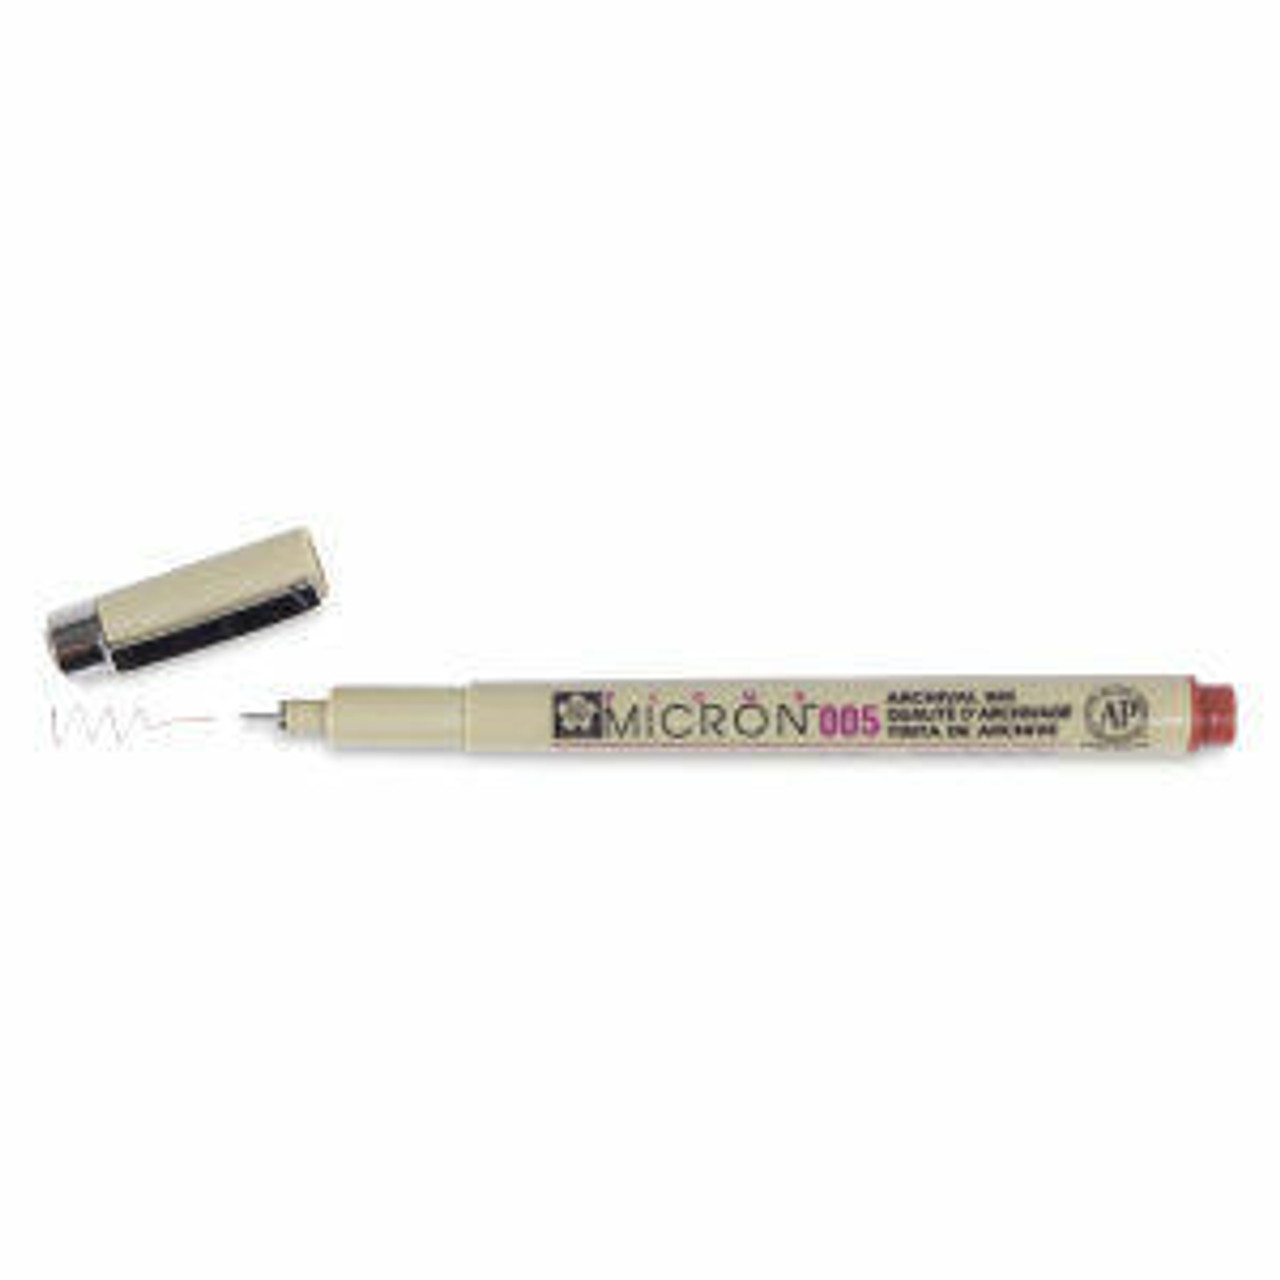 Sakura Micron Pen .20mm Point - Brown